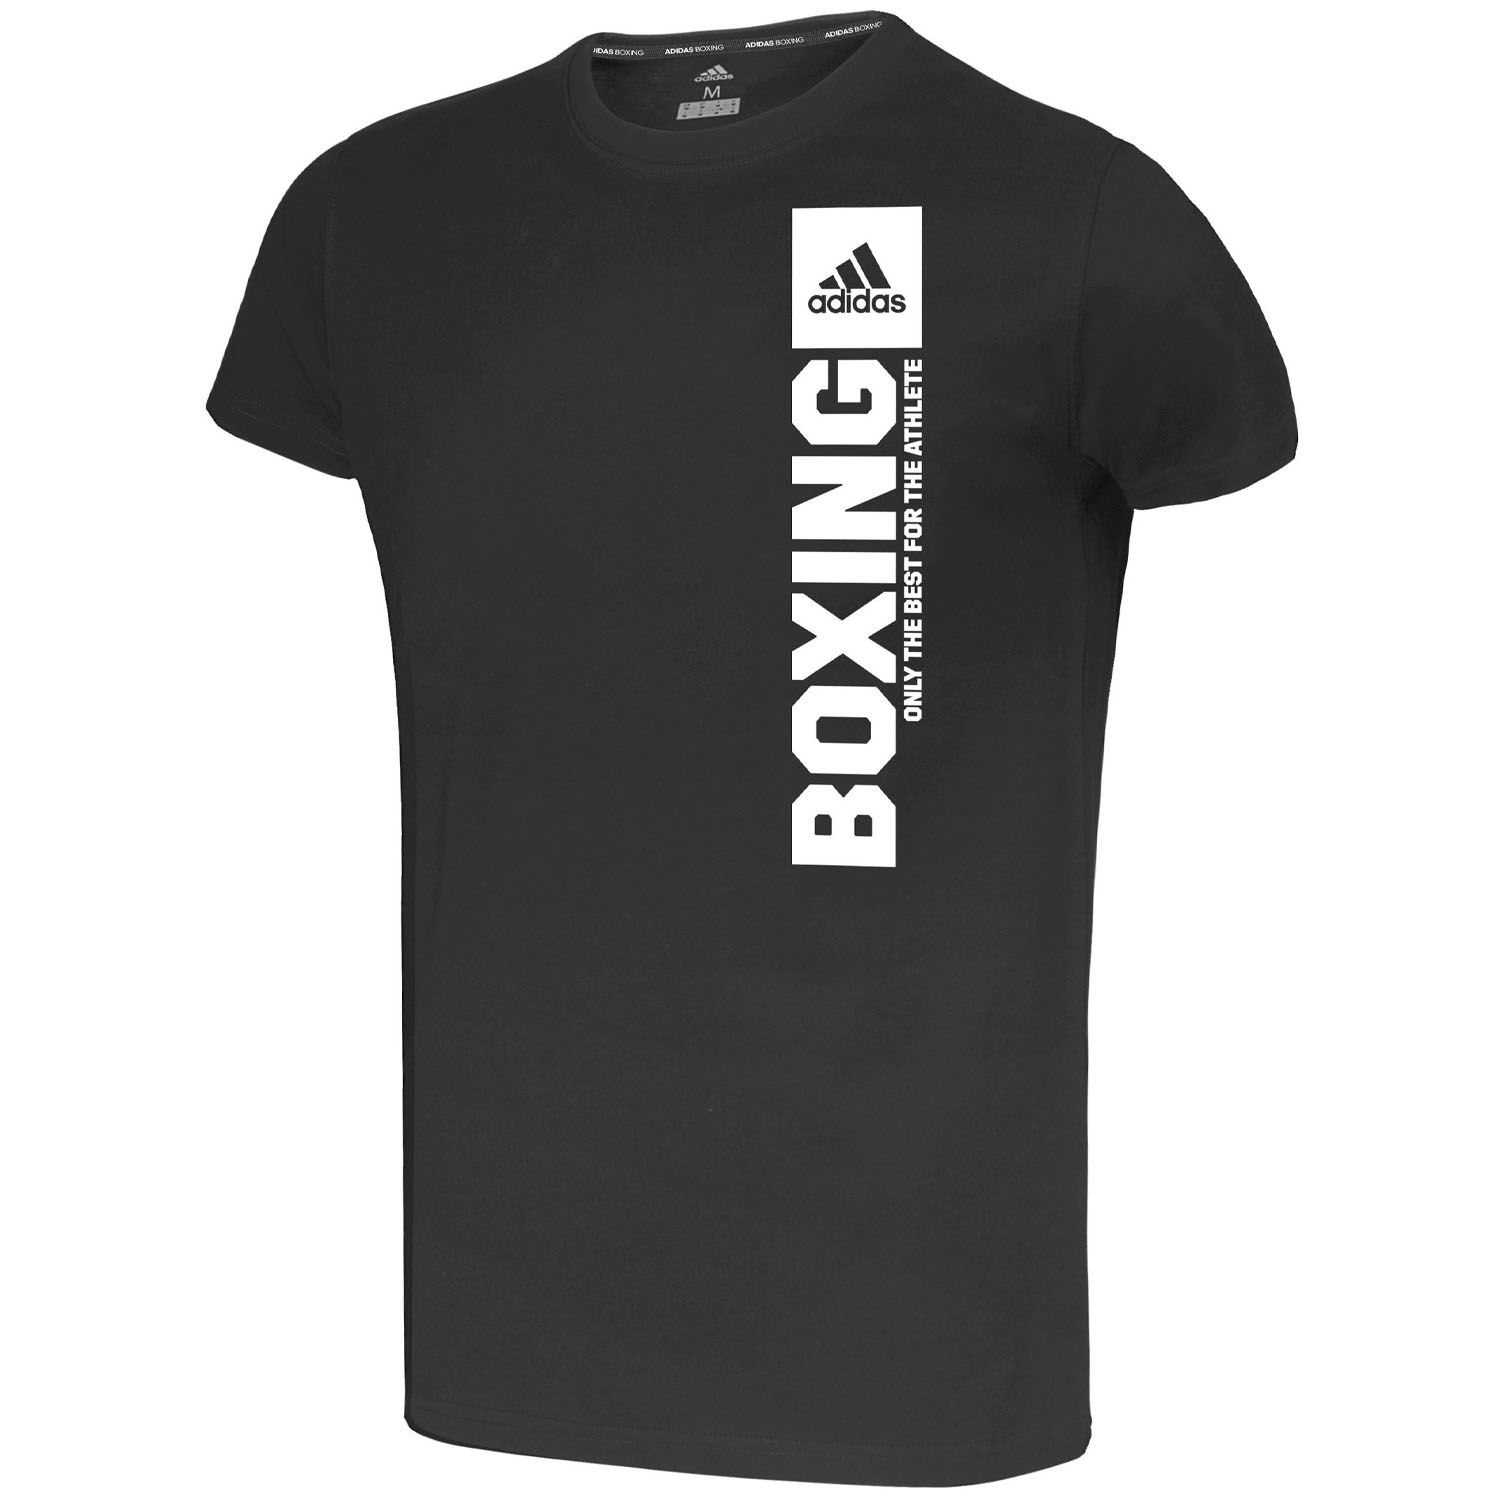 adidas T-Shirt, Community Vertical Boxing, schwarz